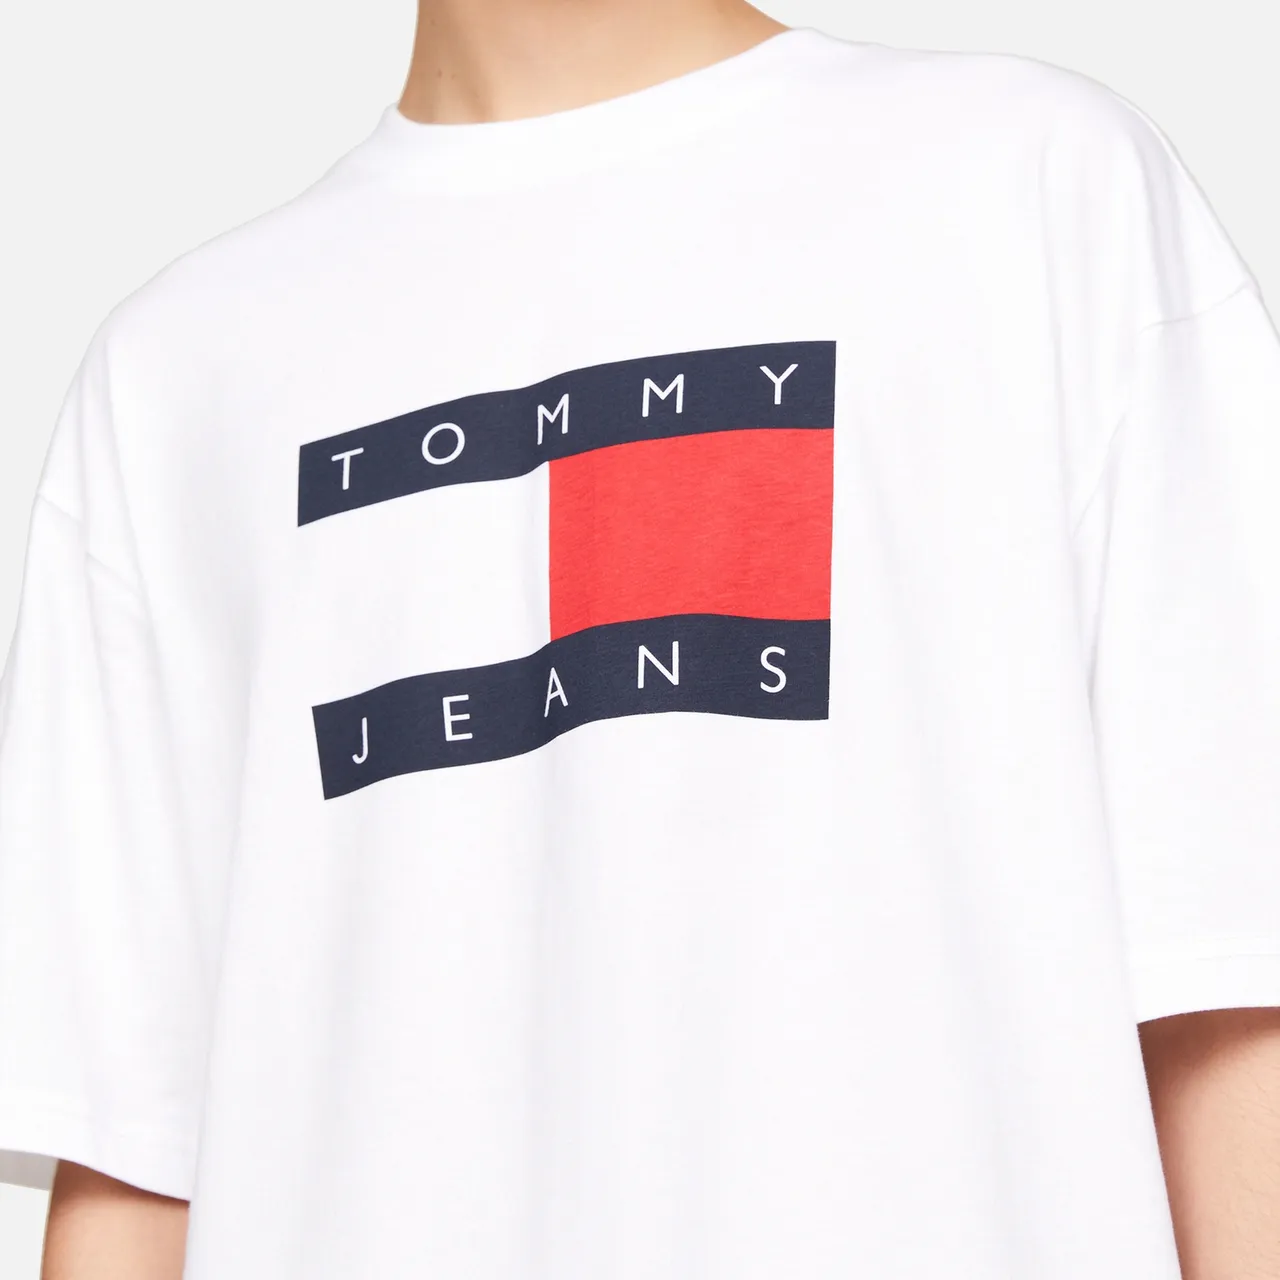 Tommy Jeans Logo Oversized Cotton T-Shirt